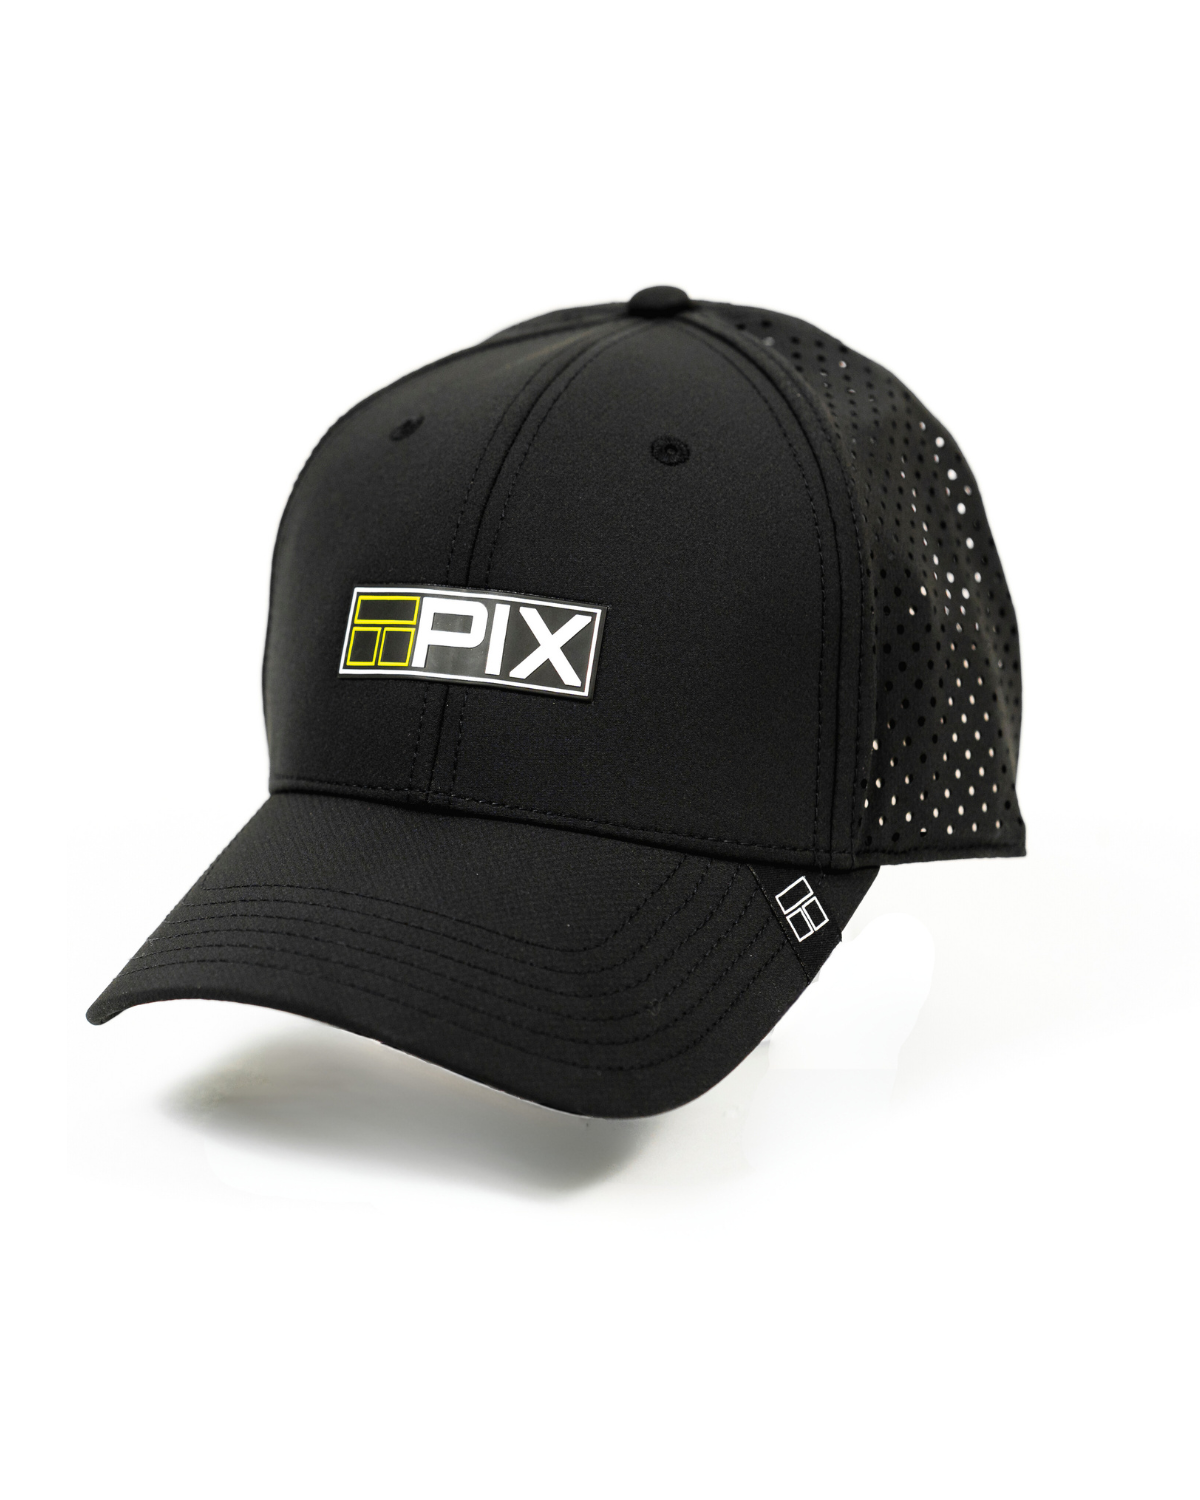 PIX Performance Hat